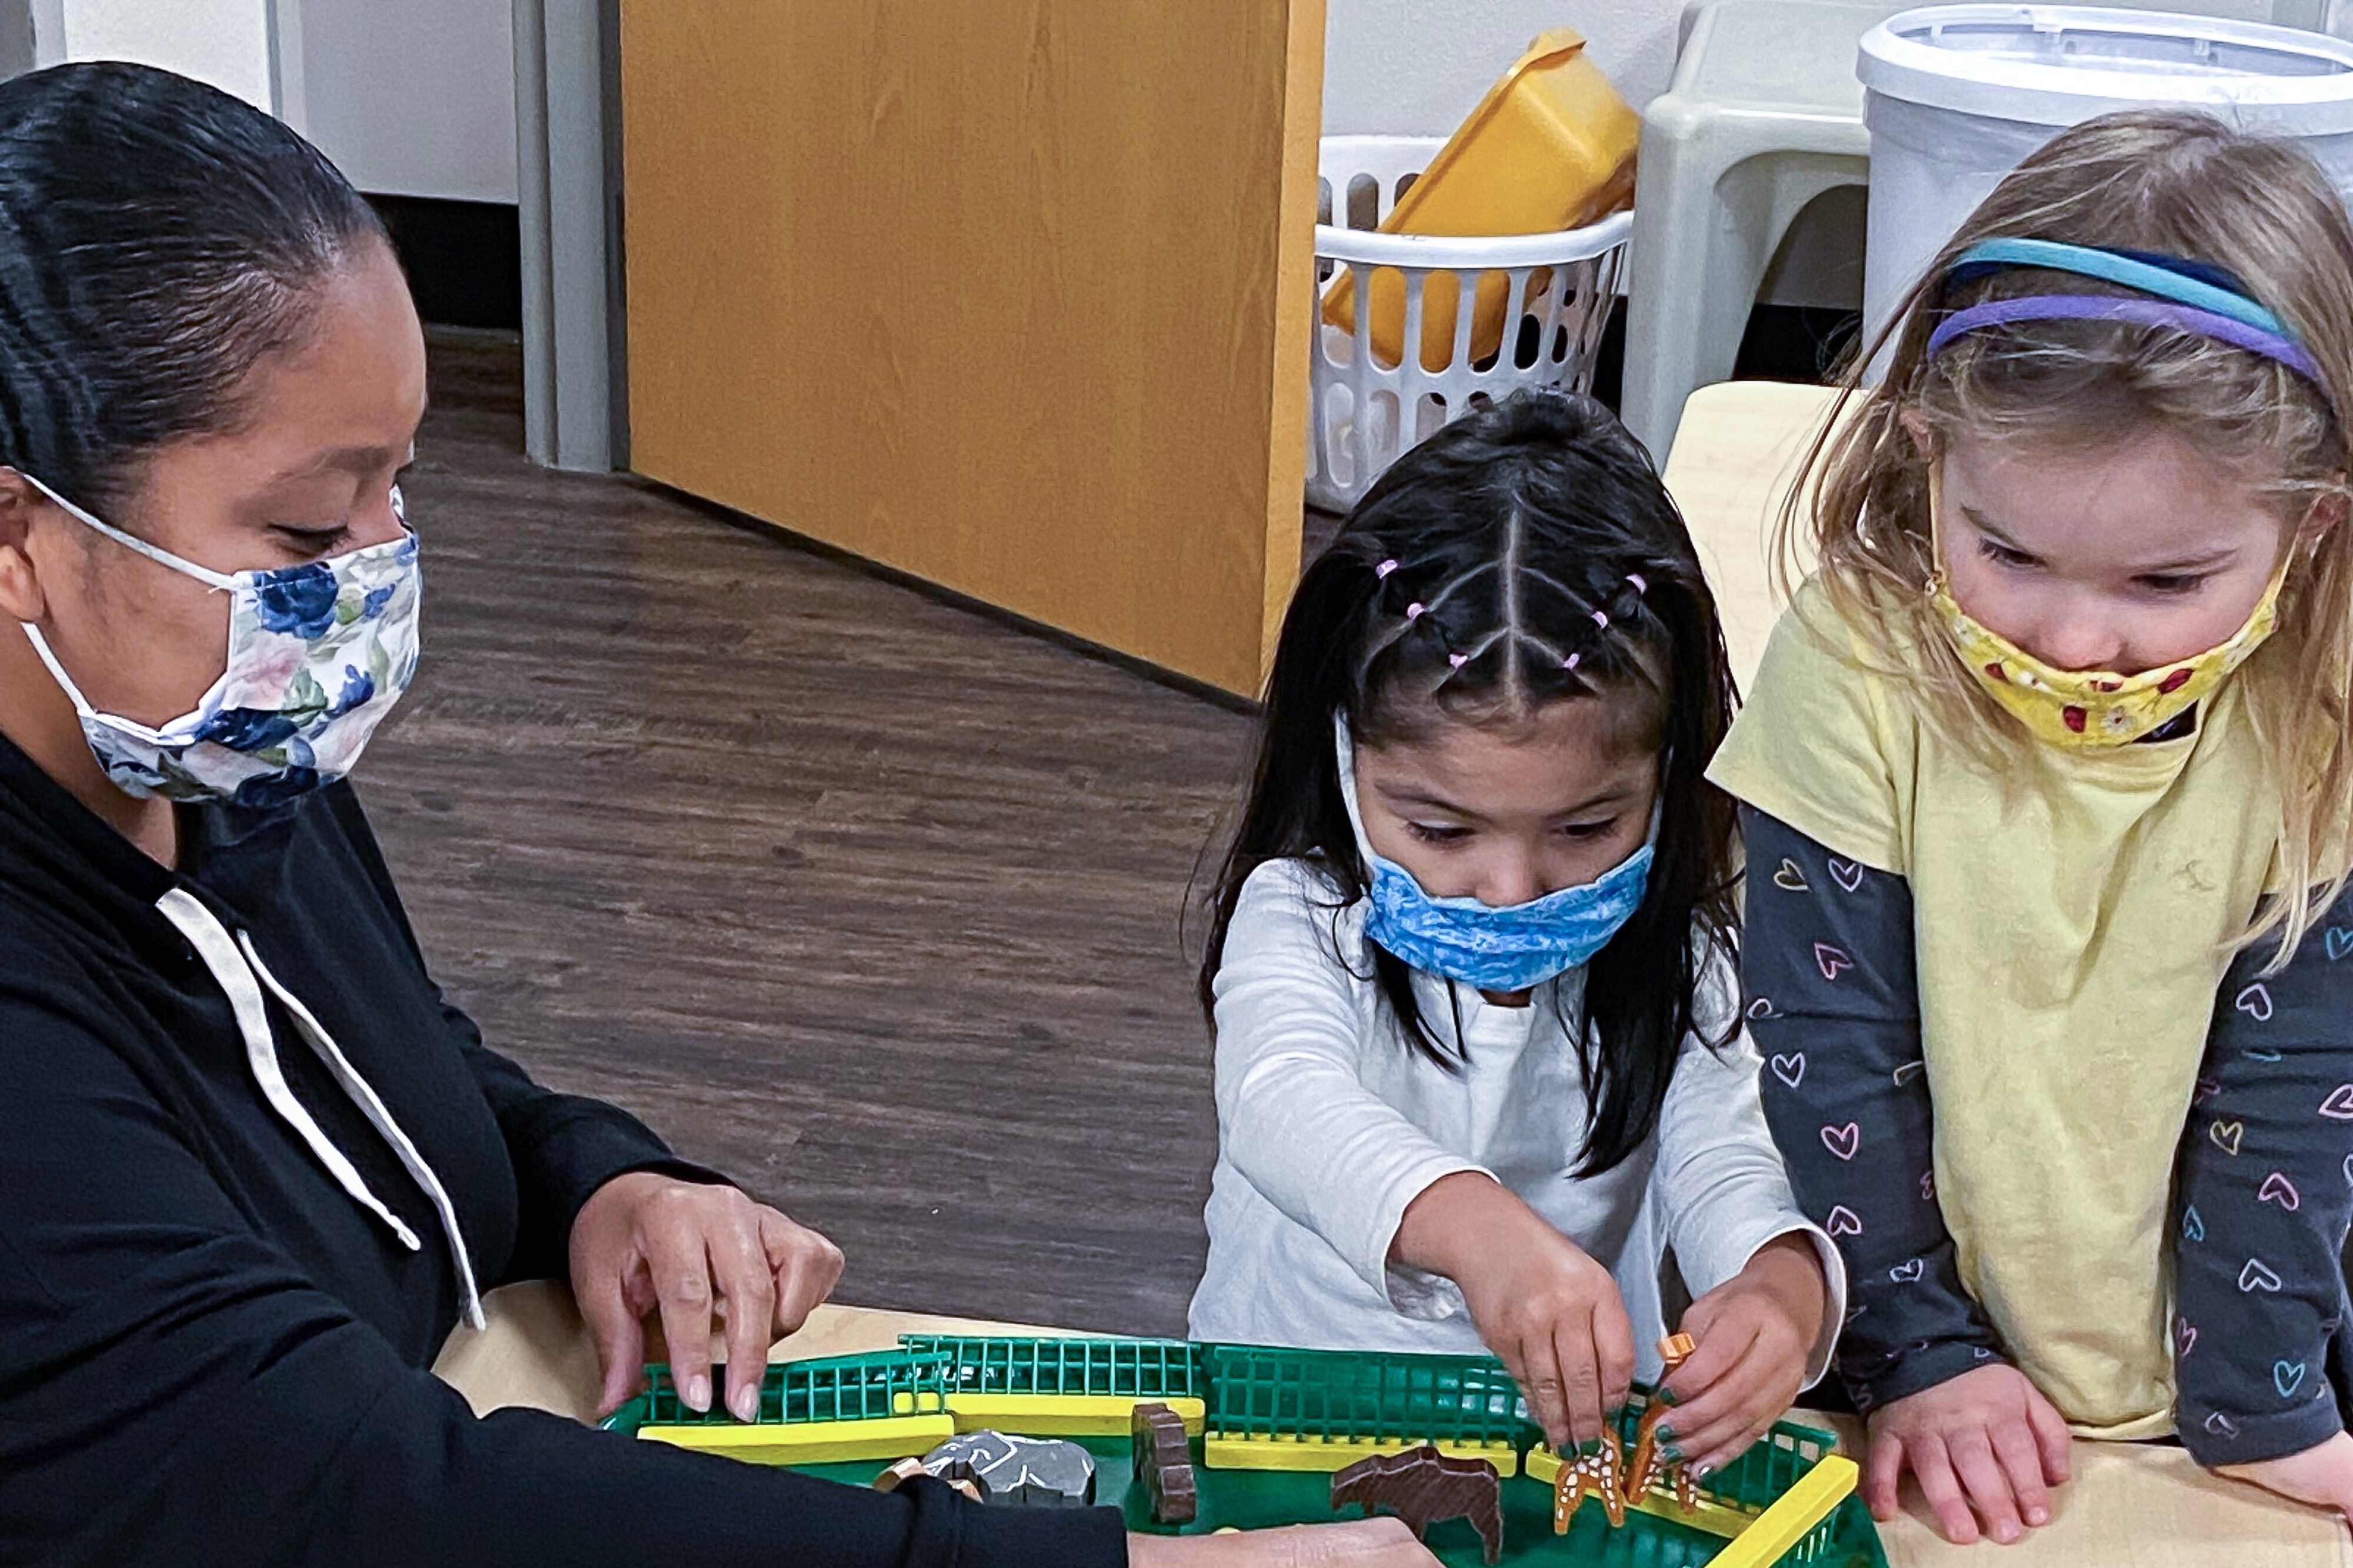 A teacher works with two preschool girls making a farm scene on a green plastic tray.